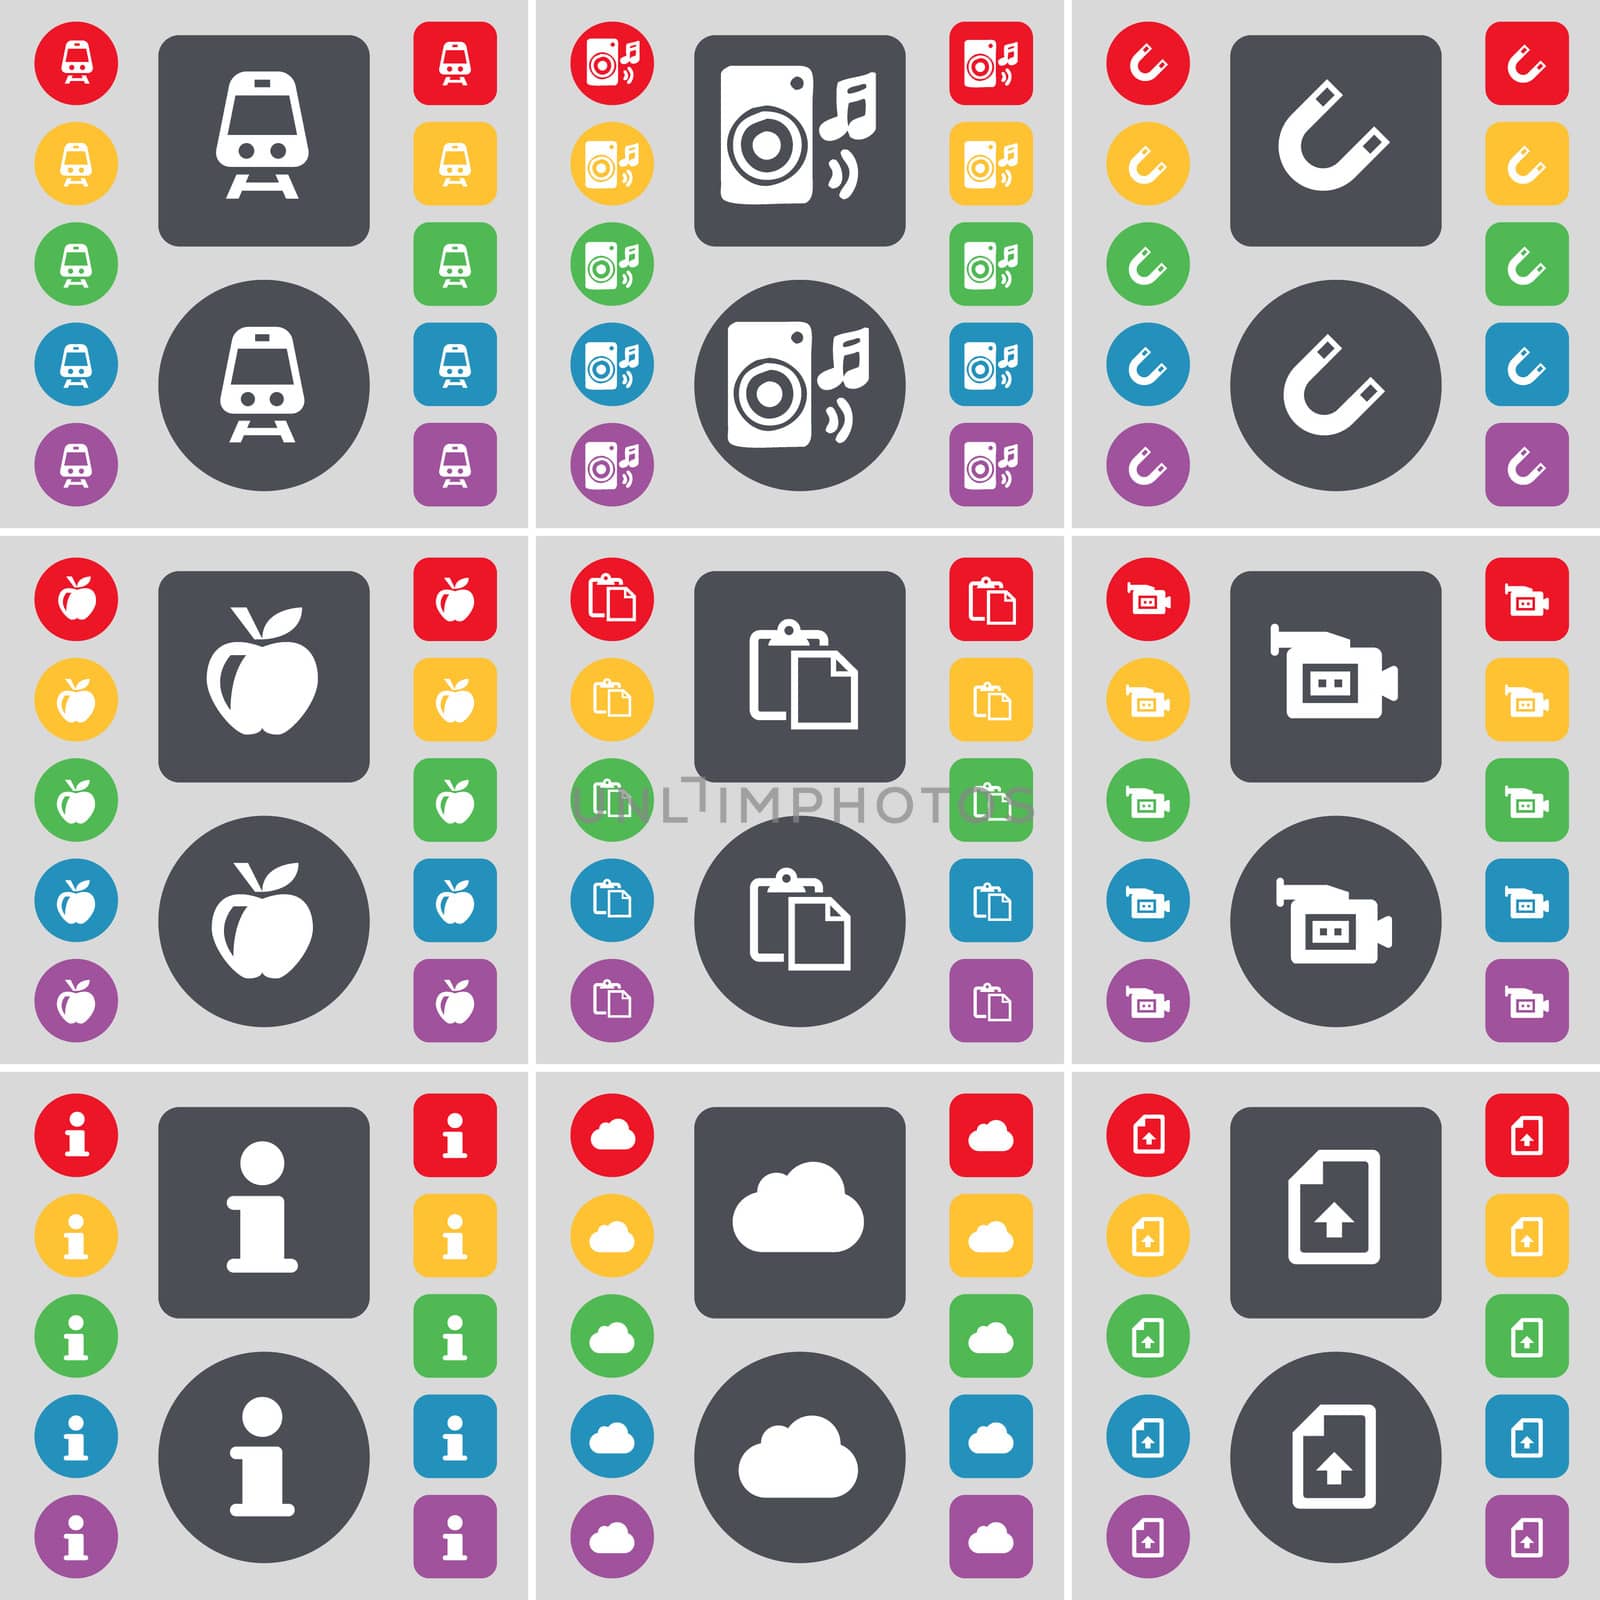 Train, Speaker, Magnet, Apple, Survey, Film camera, Information, Cloud, Upload file icon symbol. A large set of flat, colored buttons for your design.  by serhii_lohvyniuk